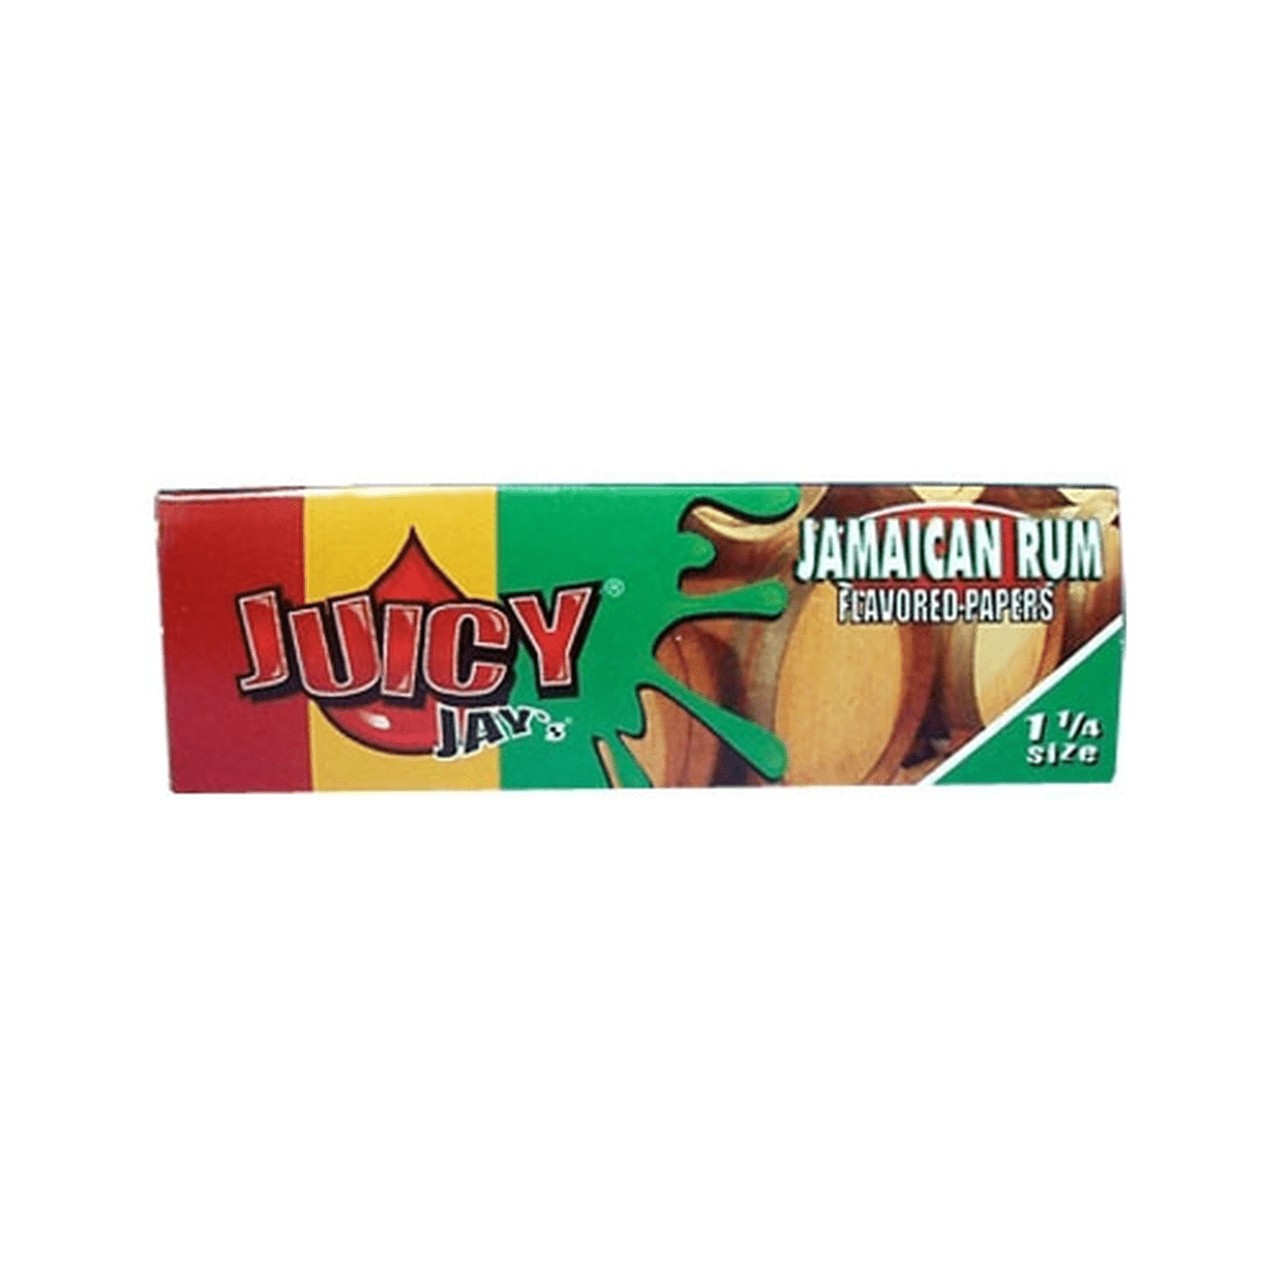 Juicy Jay Alternatives Banana Juicy Jay's 1 1/4 Flavored Rolling Papers